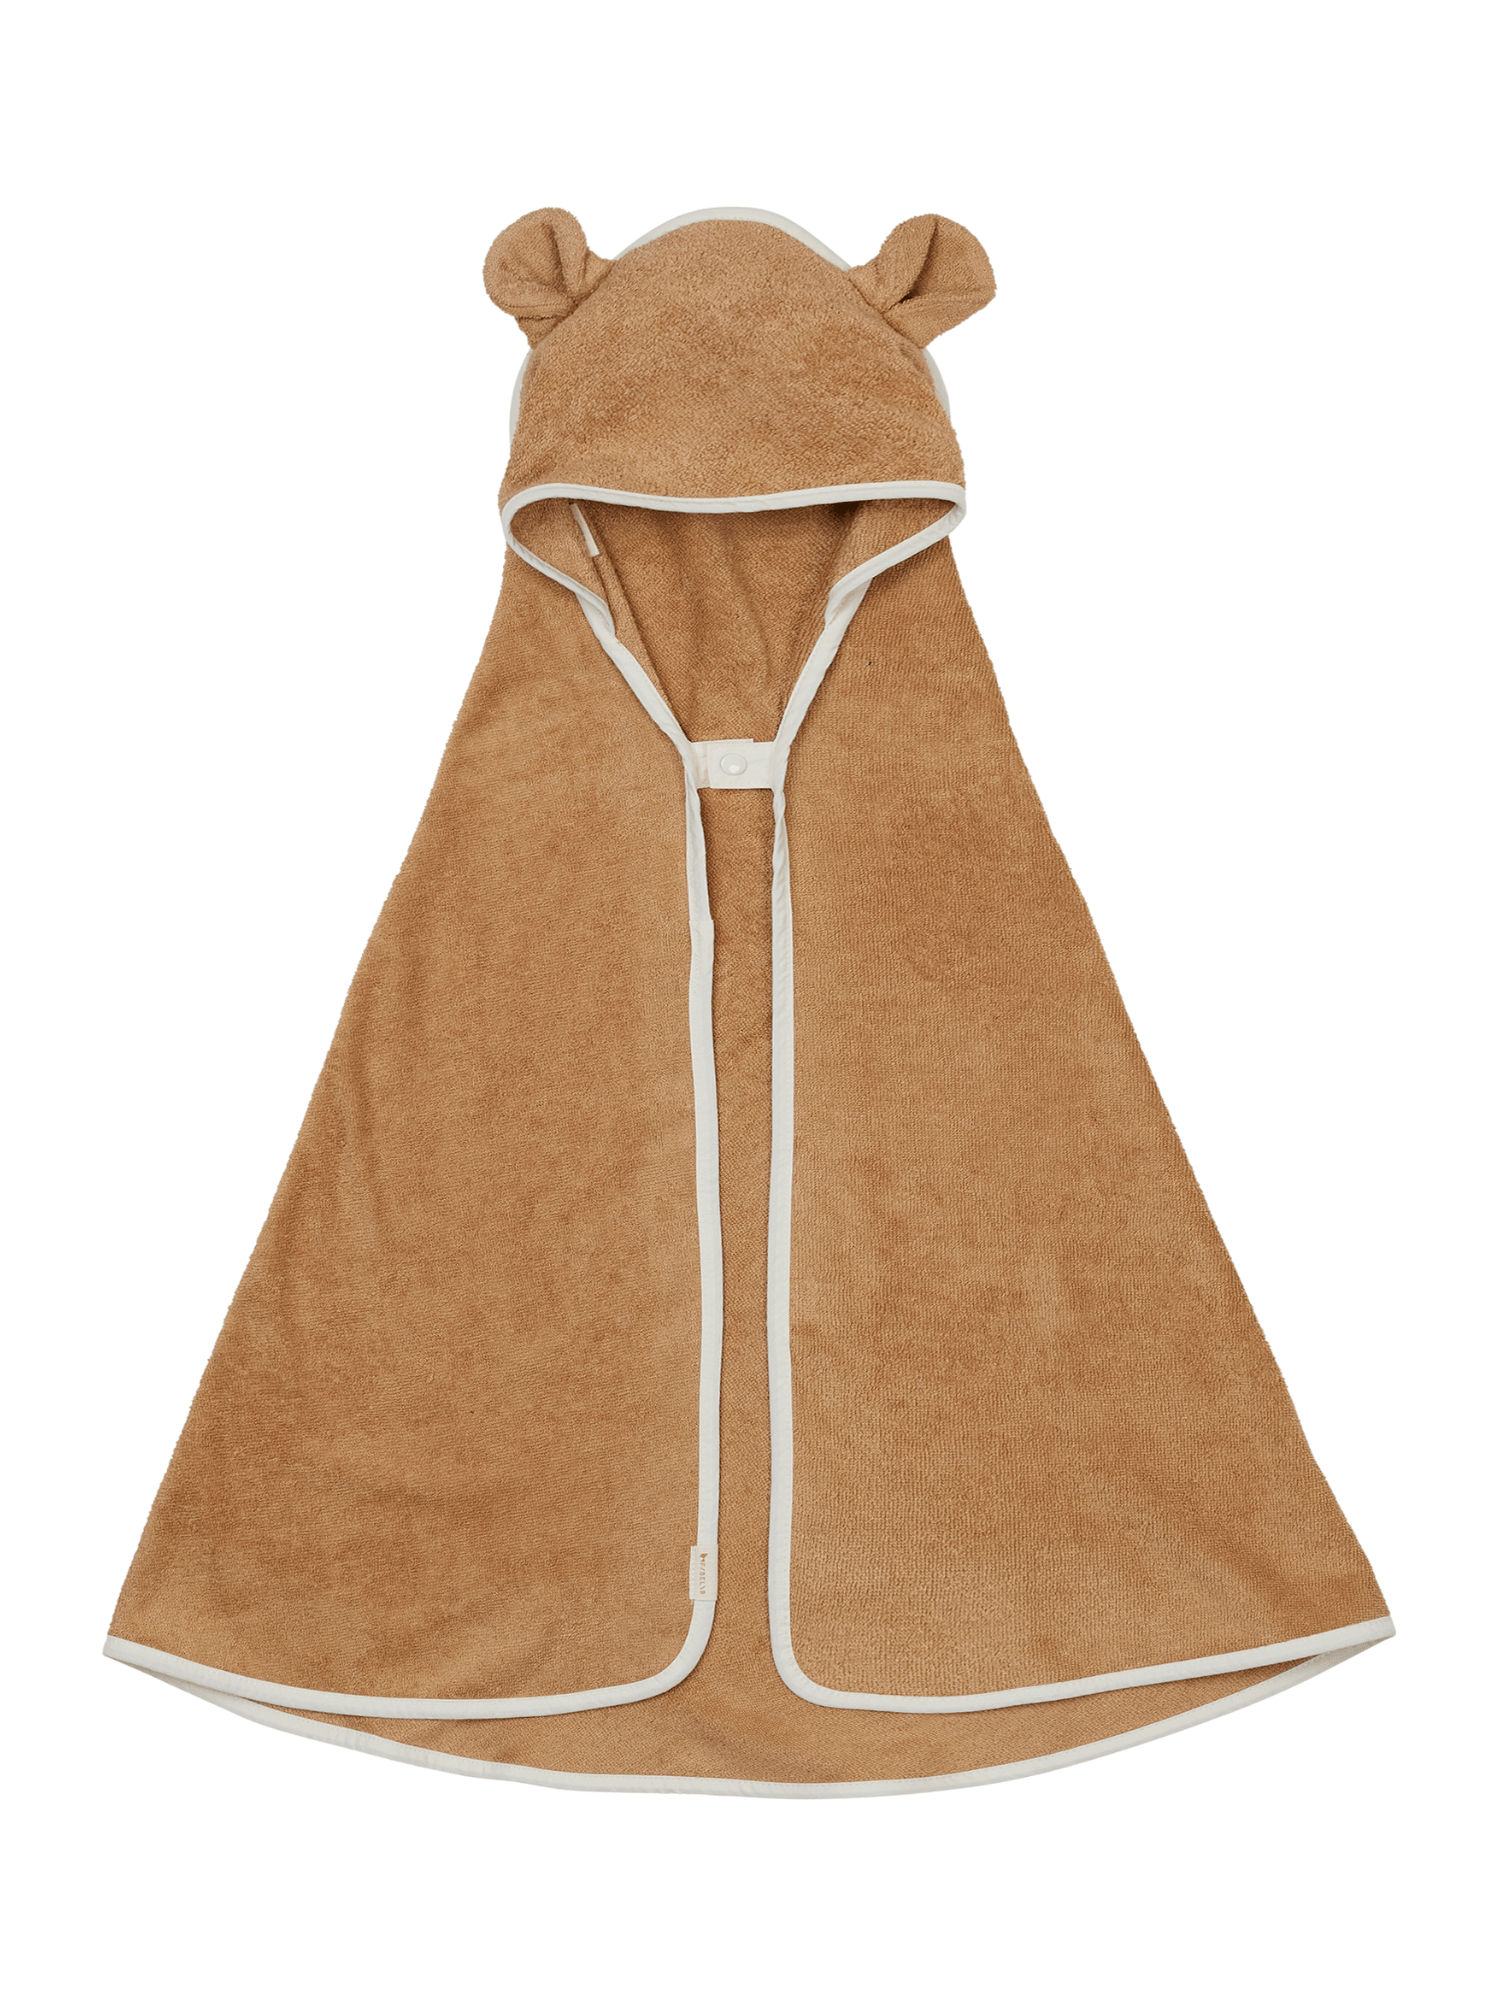 Bear Bamboo Hooded Towel For Kids By Fabelab Ochre